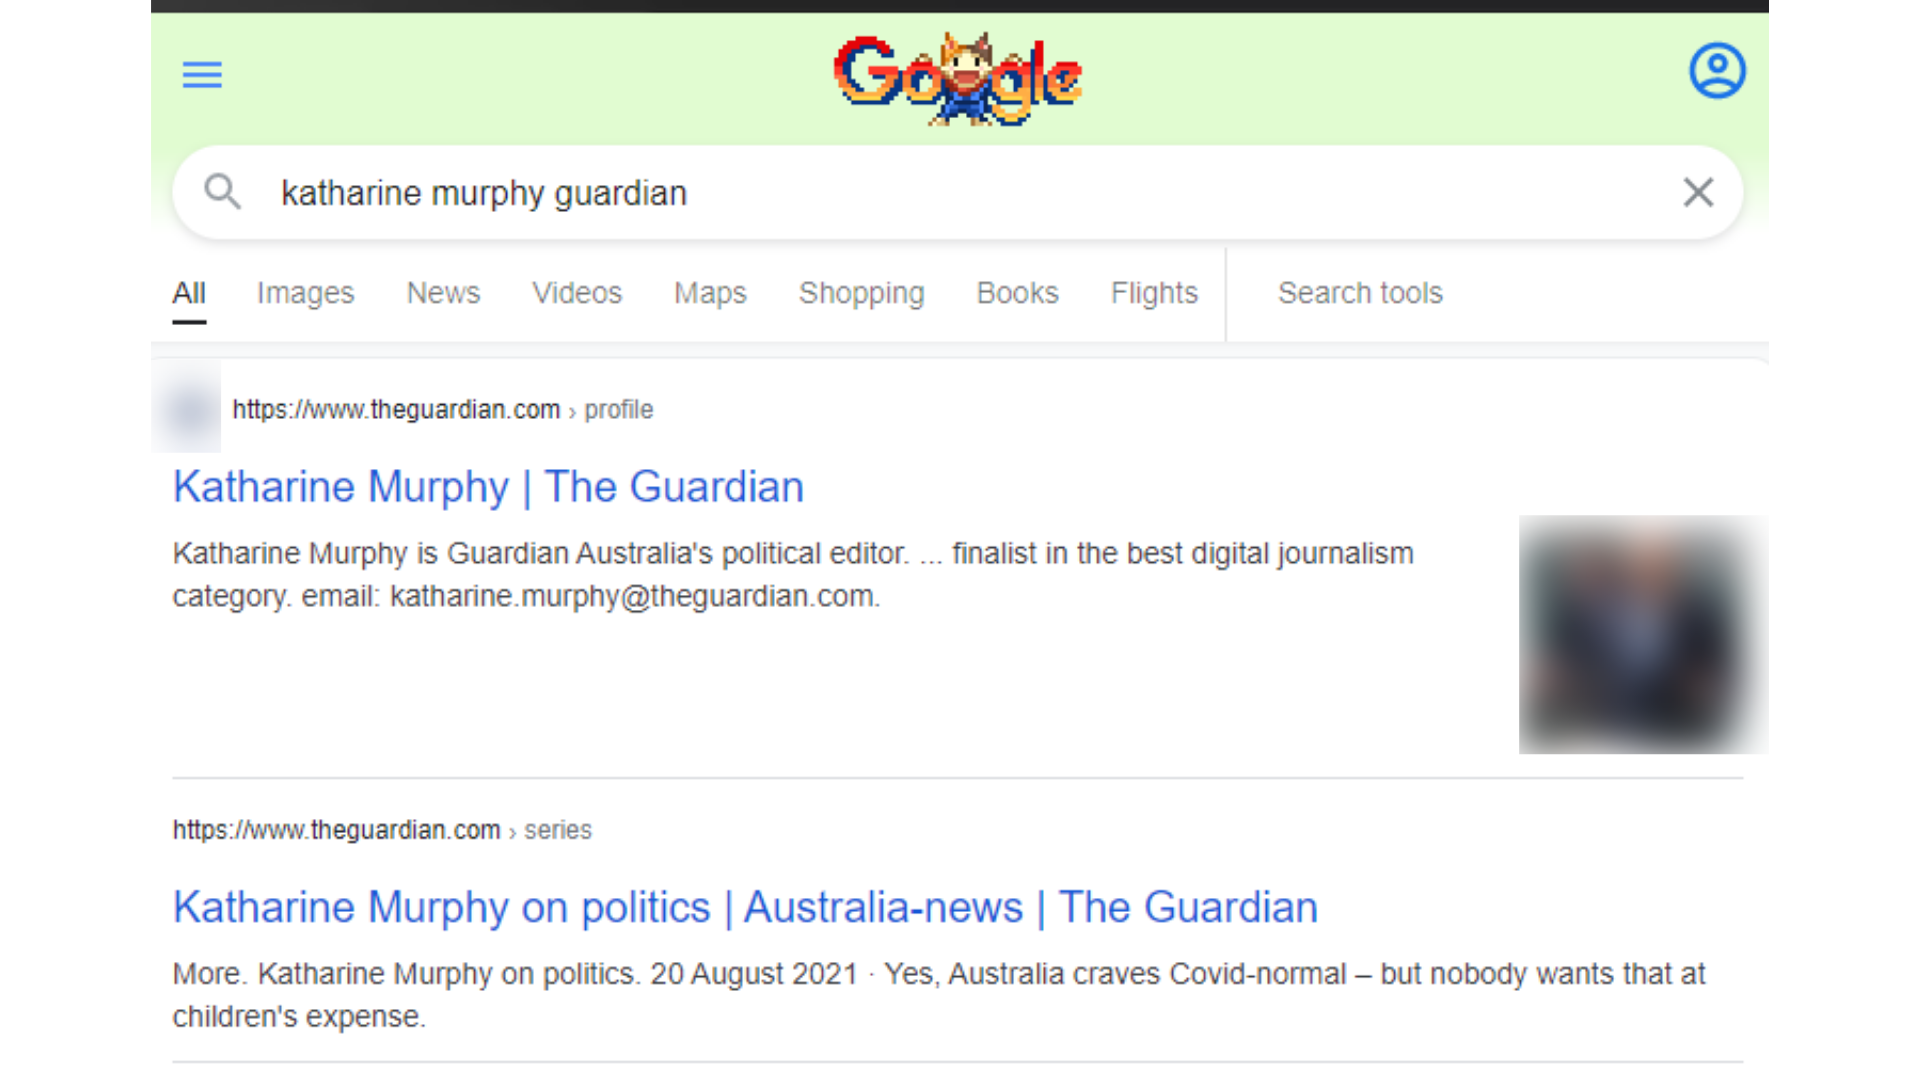 Katharine Murphy Guardian Google Search